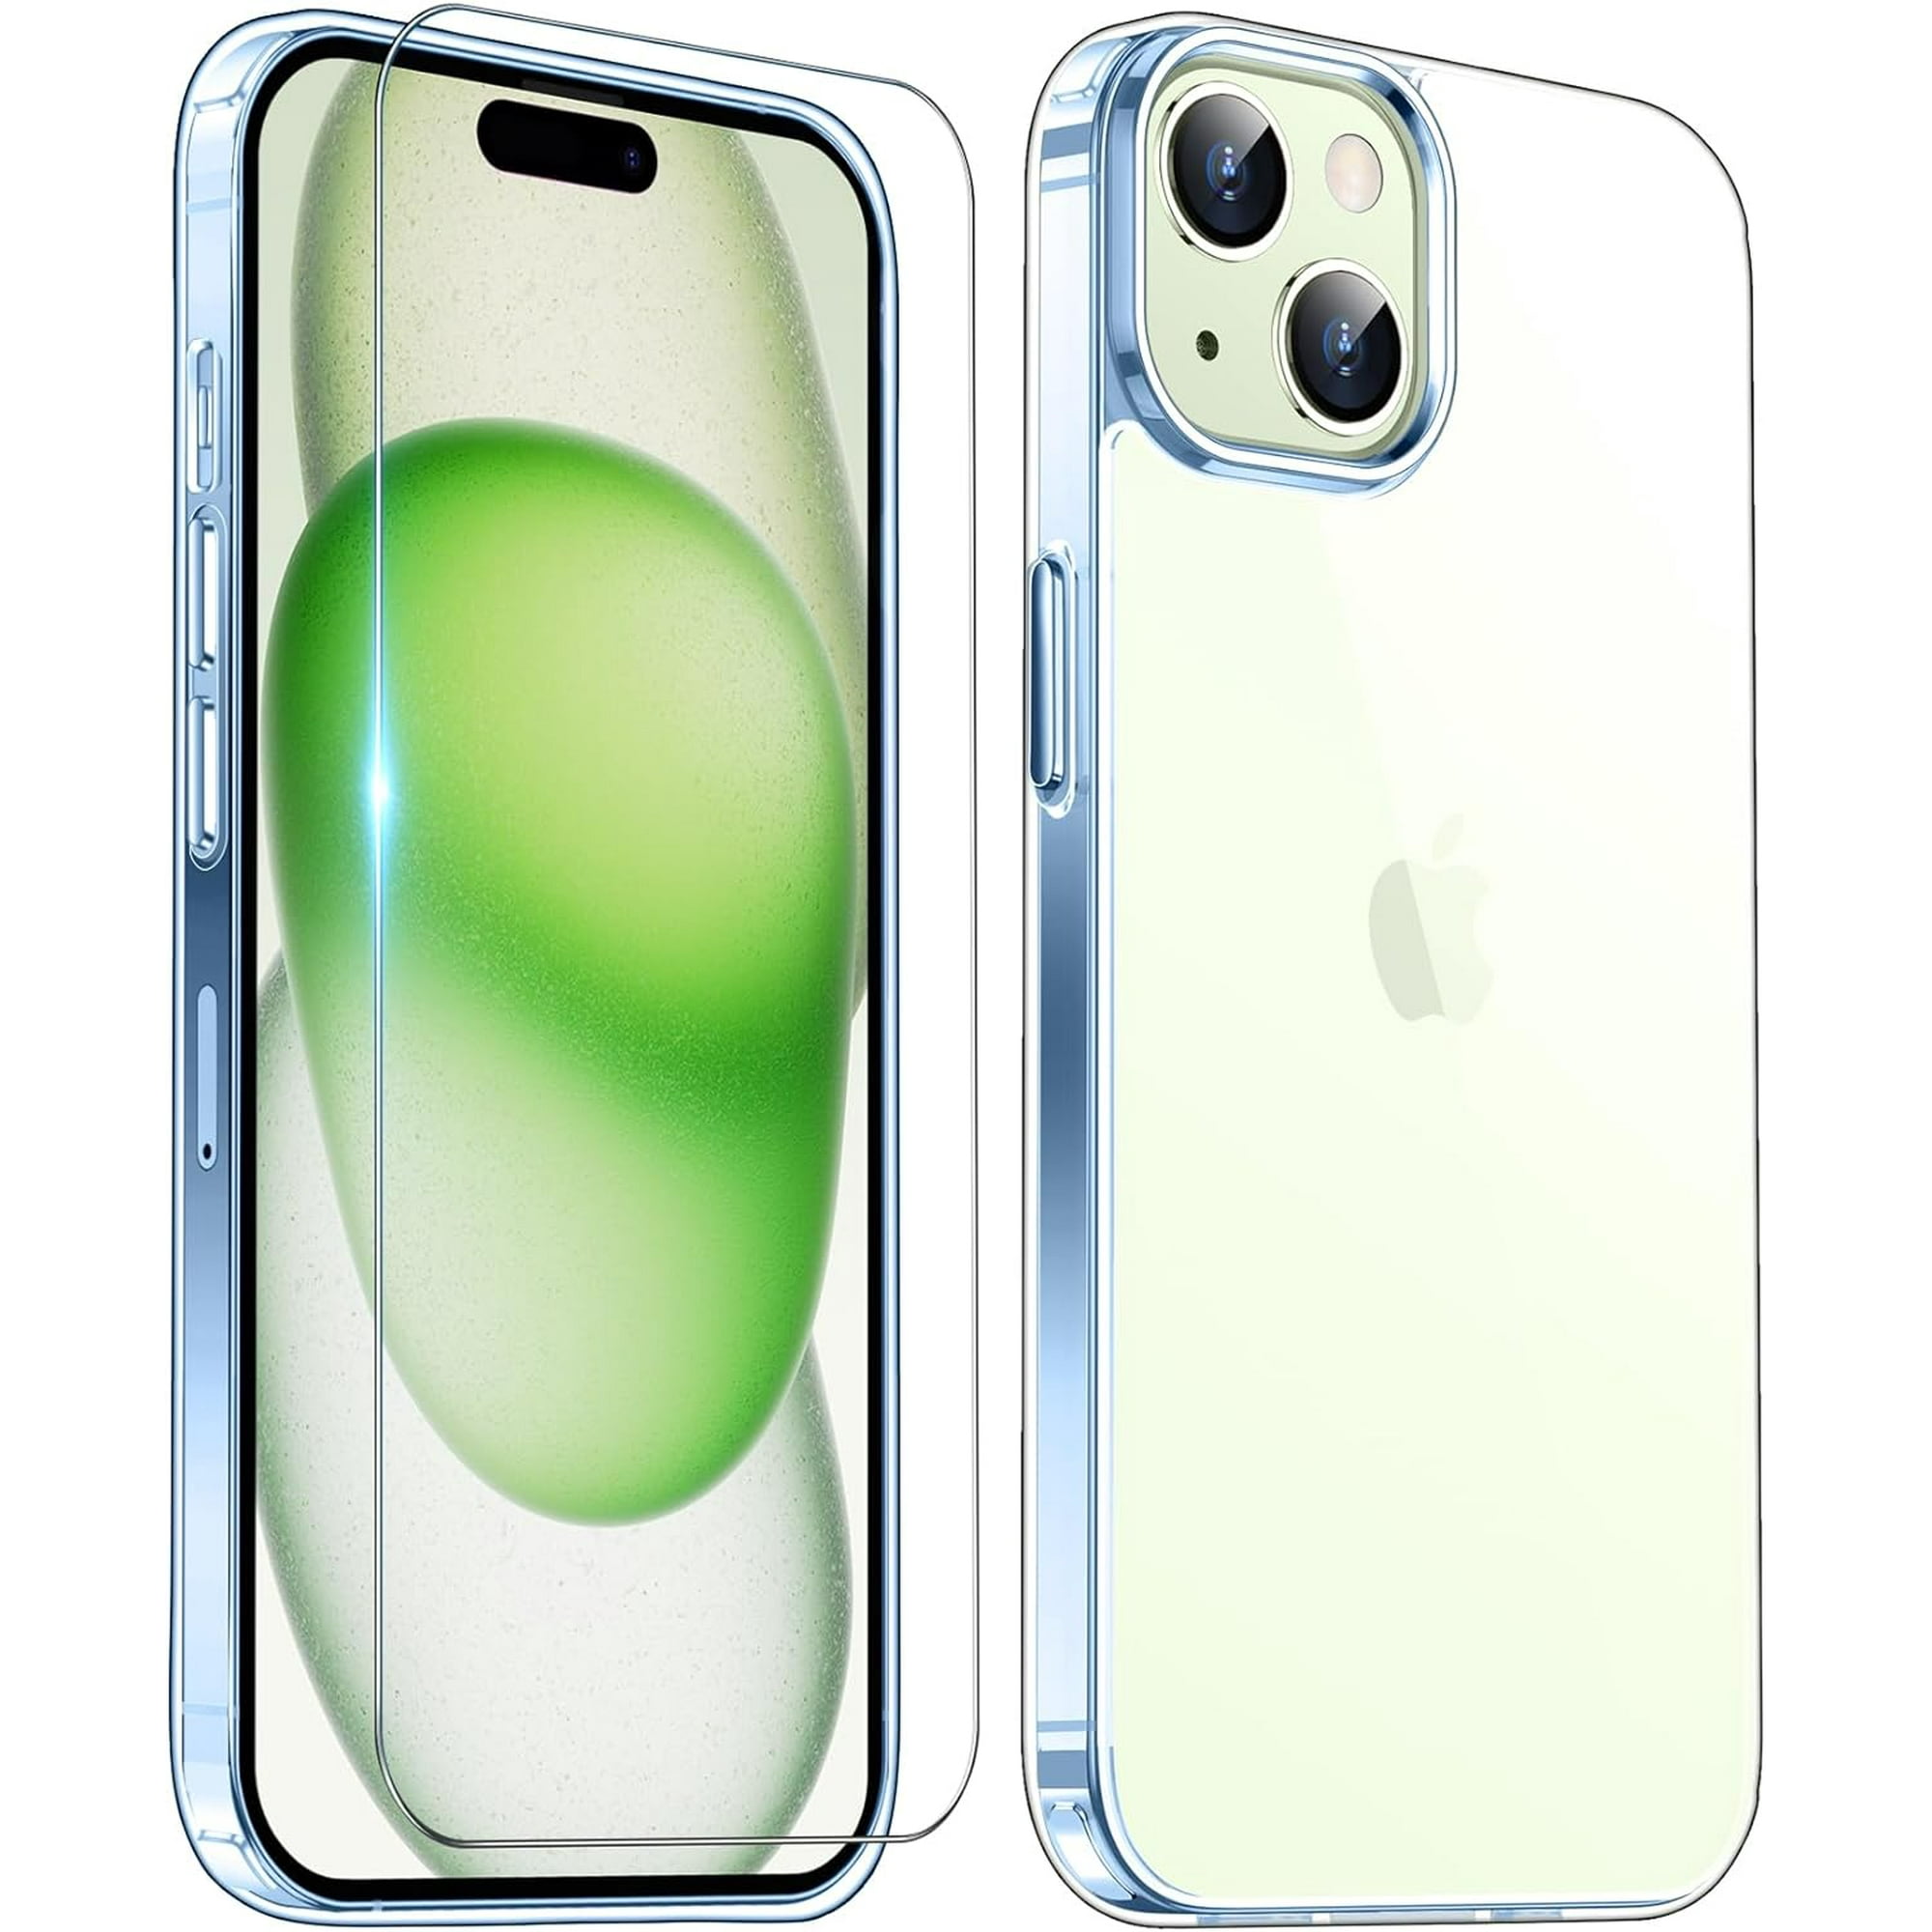 Temdan - Carcasa transparente para iPhone 12 y iPhone 12 Pro